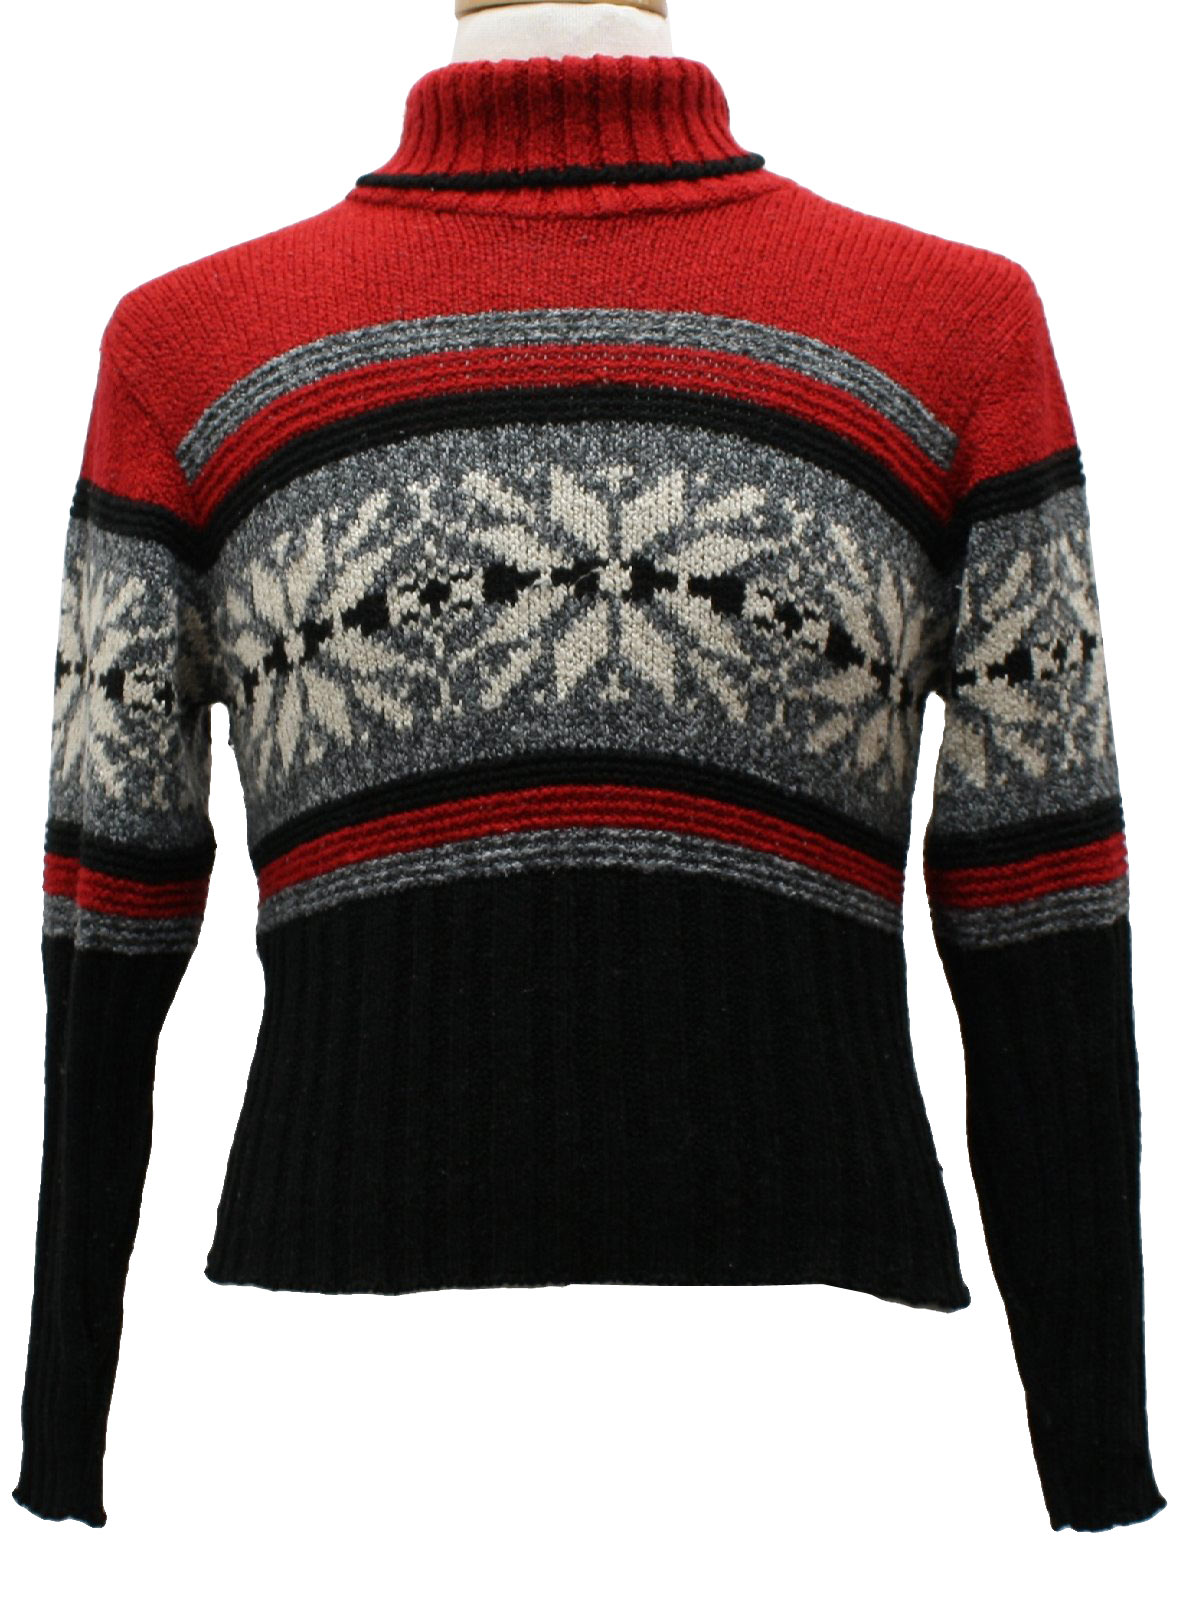 Womens/Girls Ugly Christmas Ski Style Sweater: -Sweater Project- Girls ...